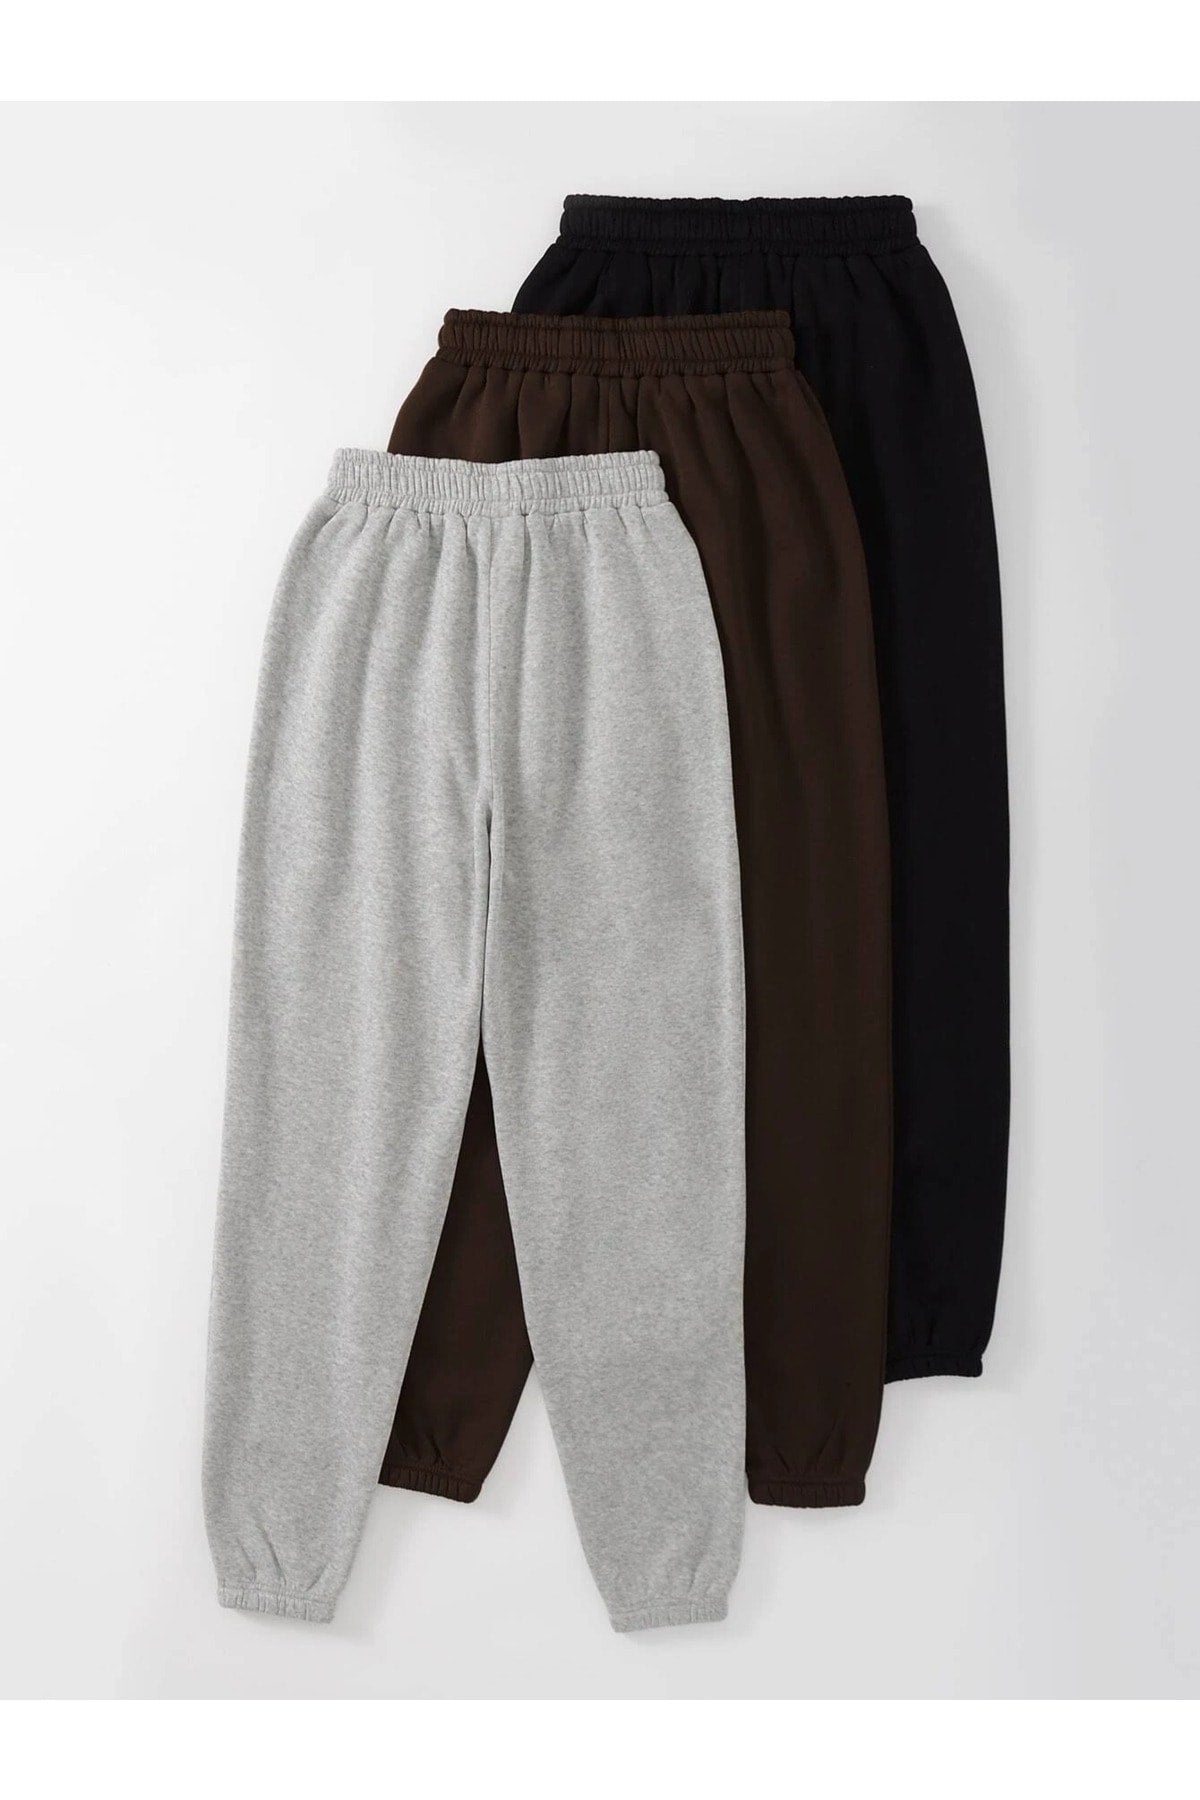 3-pack Arizona Printed Jogger Sweatpants - Black Gray And Brown Elastic Leg High Waist Summer